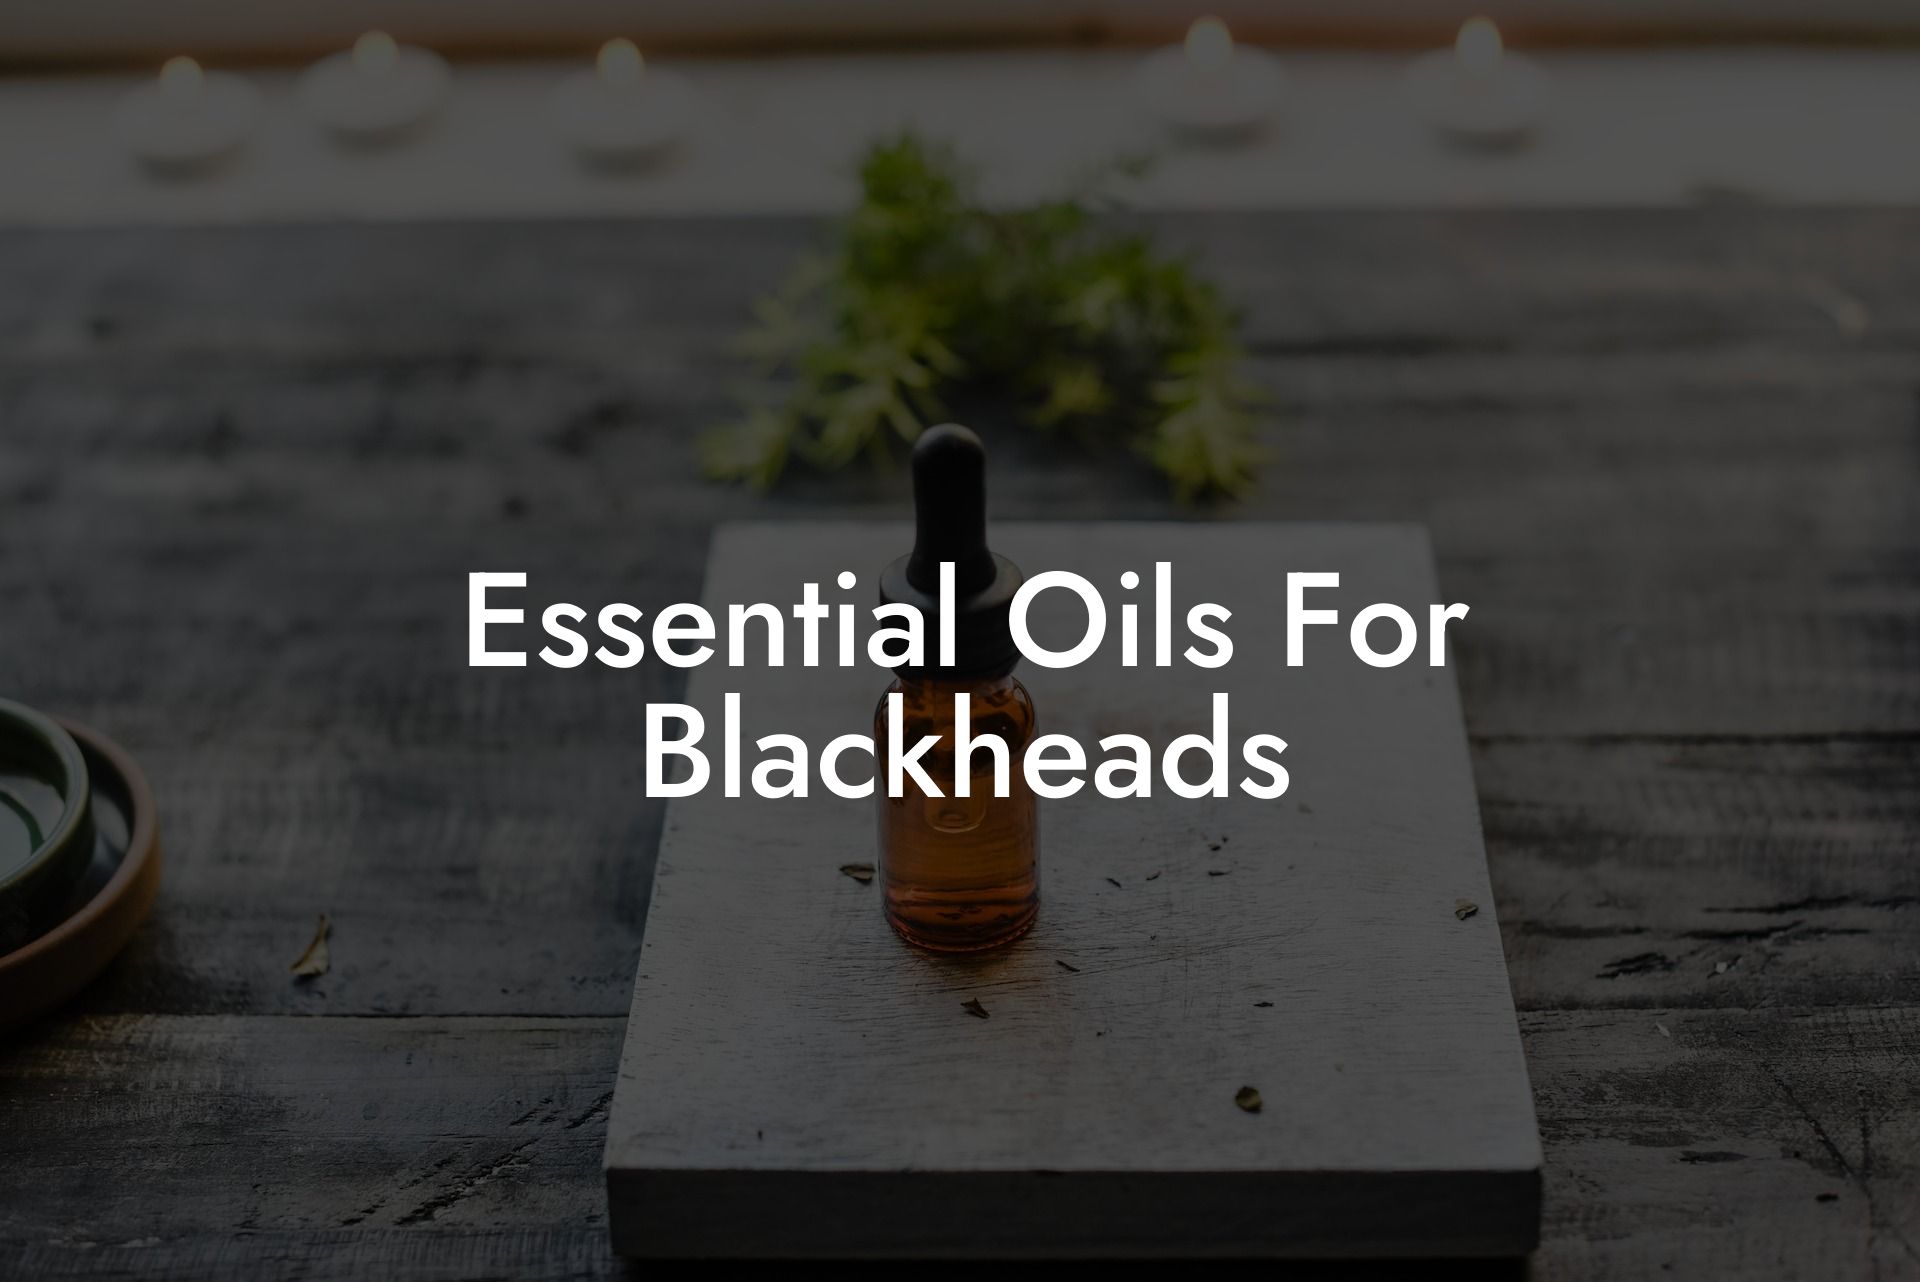 Essential Oils For Blackheads